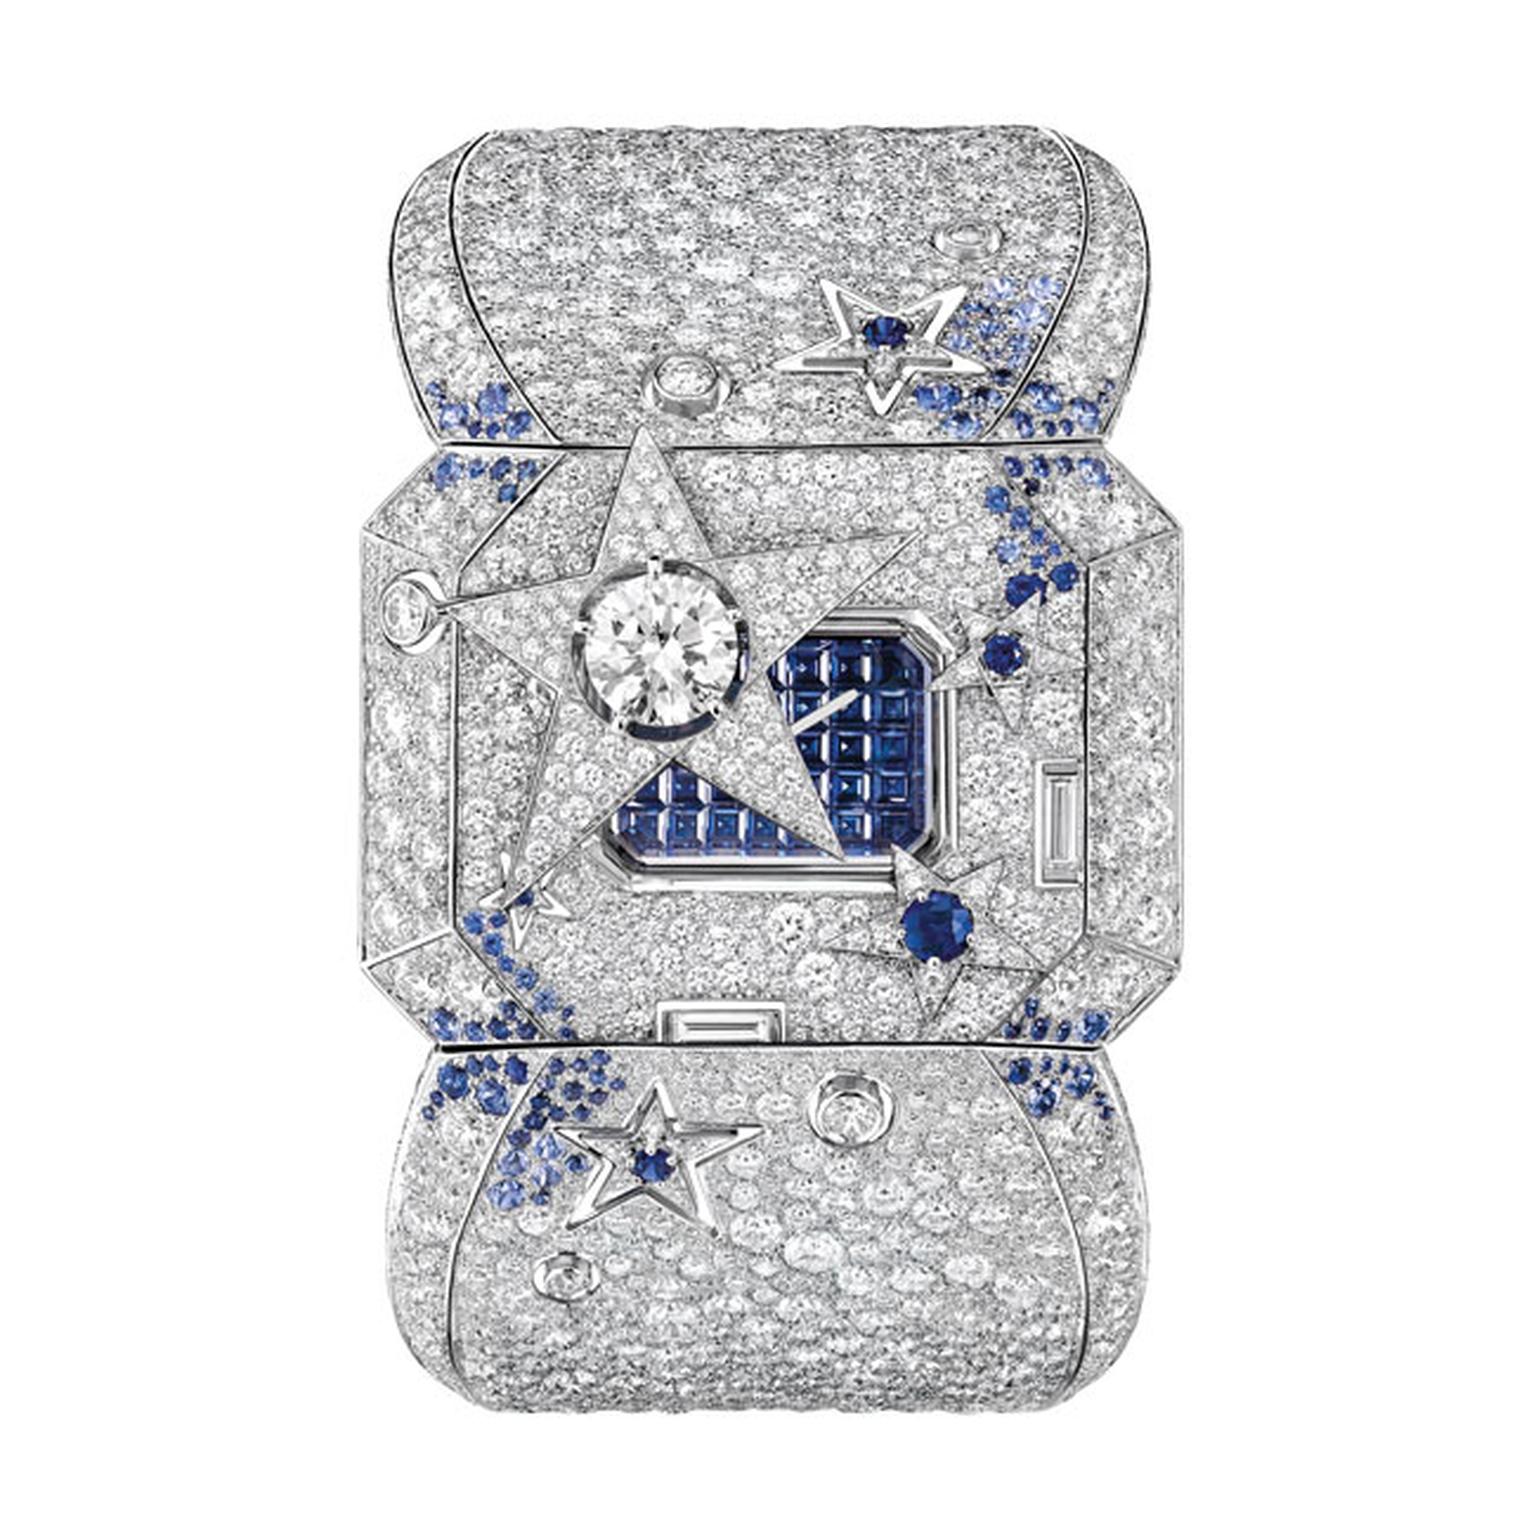 Chanel high jewellery Cométe secret diamond watch_main